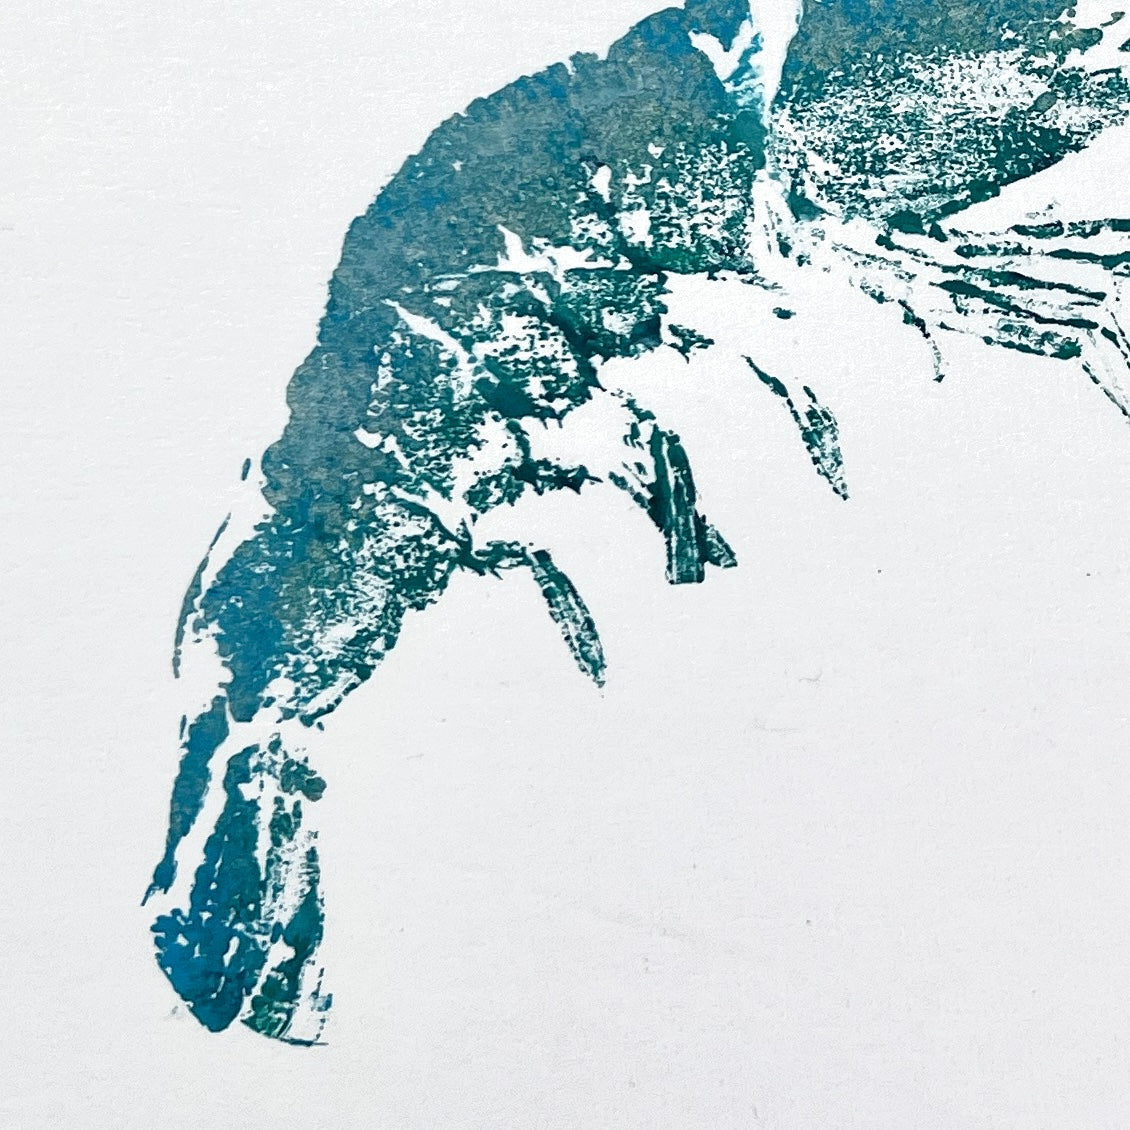 Gyotaku Impression taken from the surface of a Large Prawn